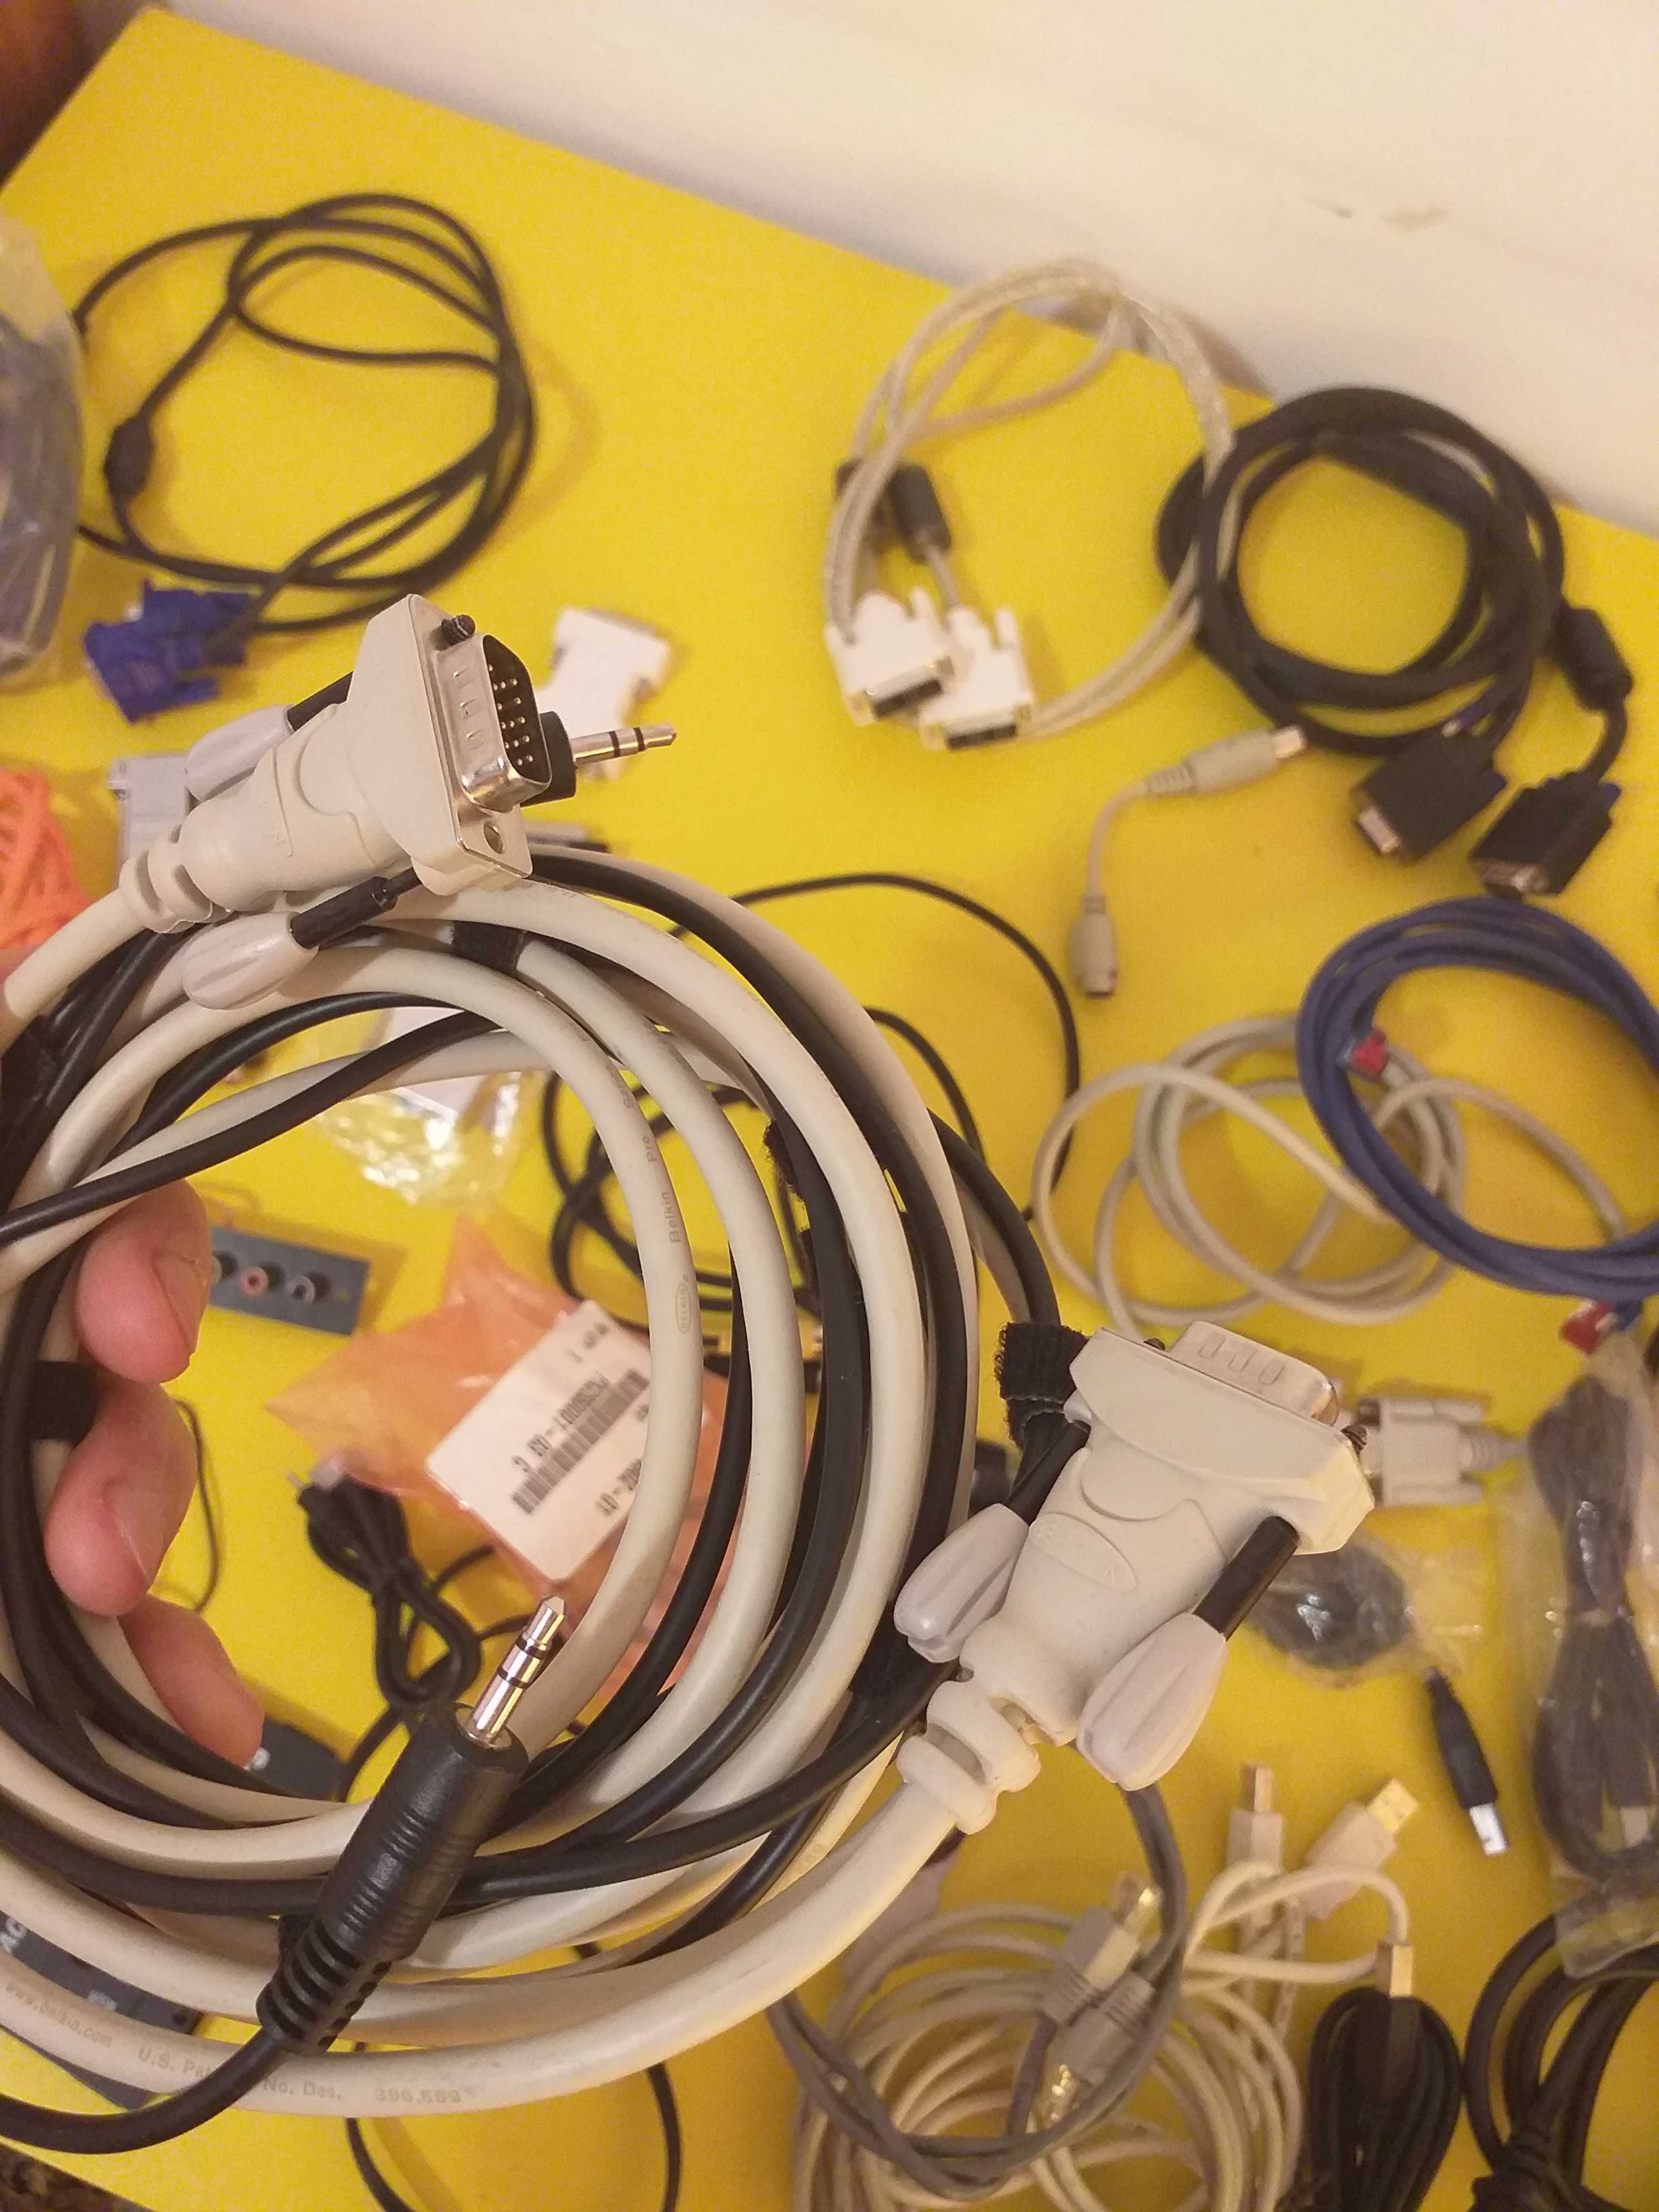 50 Cabluri diferite tipuri/mufe pt pc,rca,electr. Etc